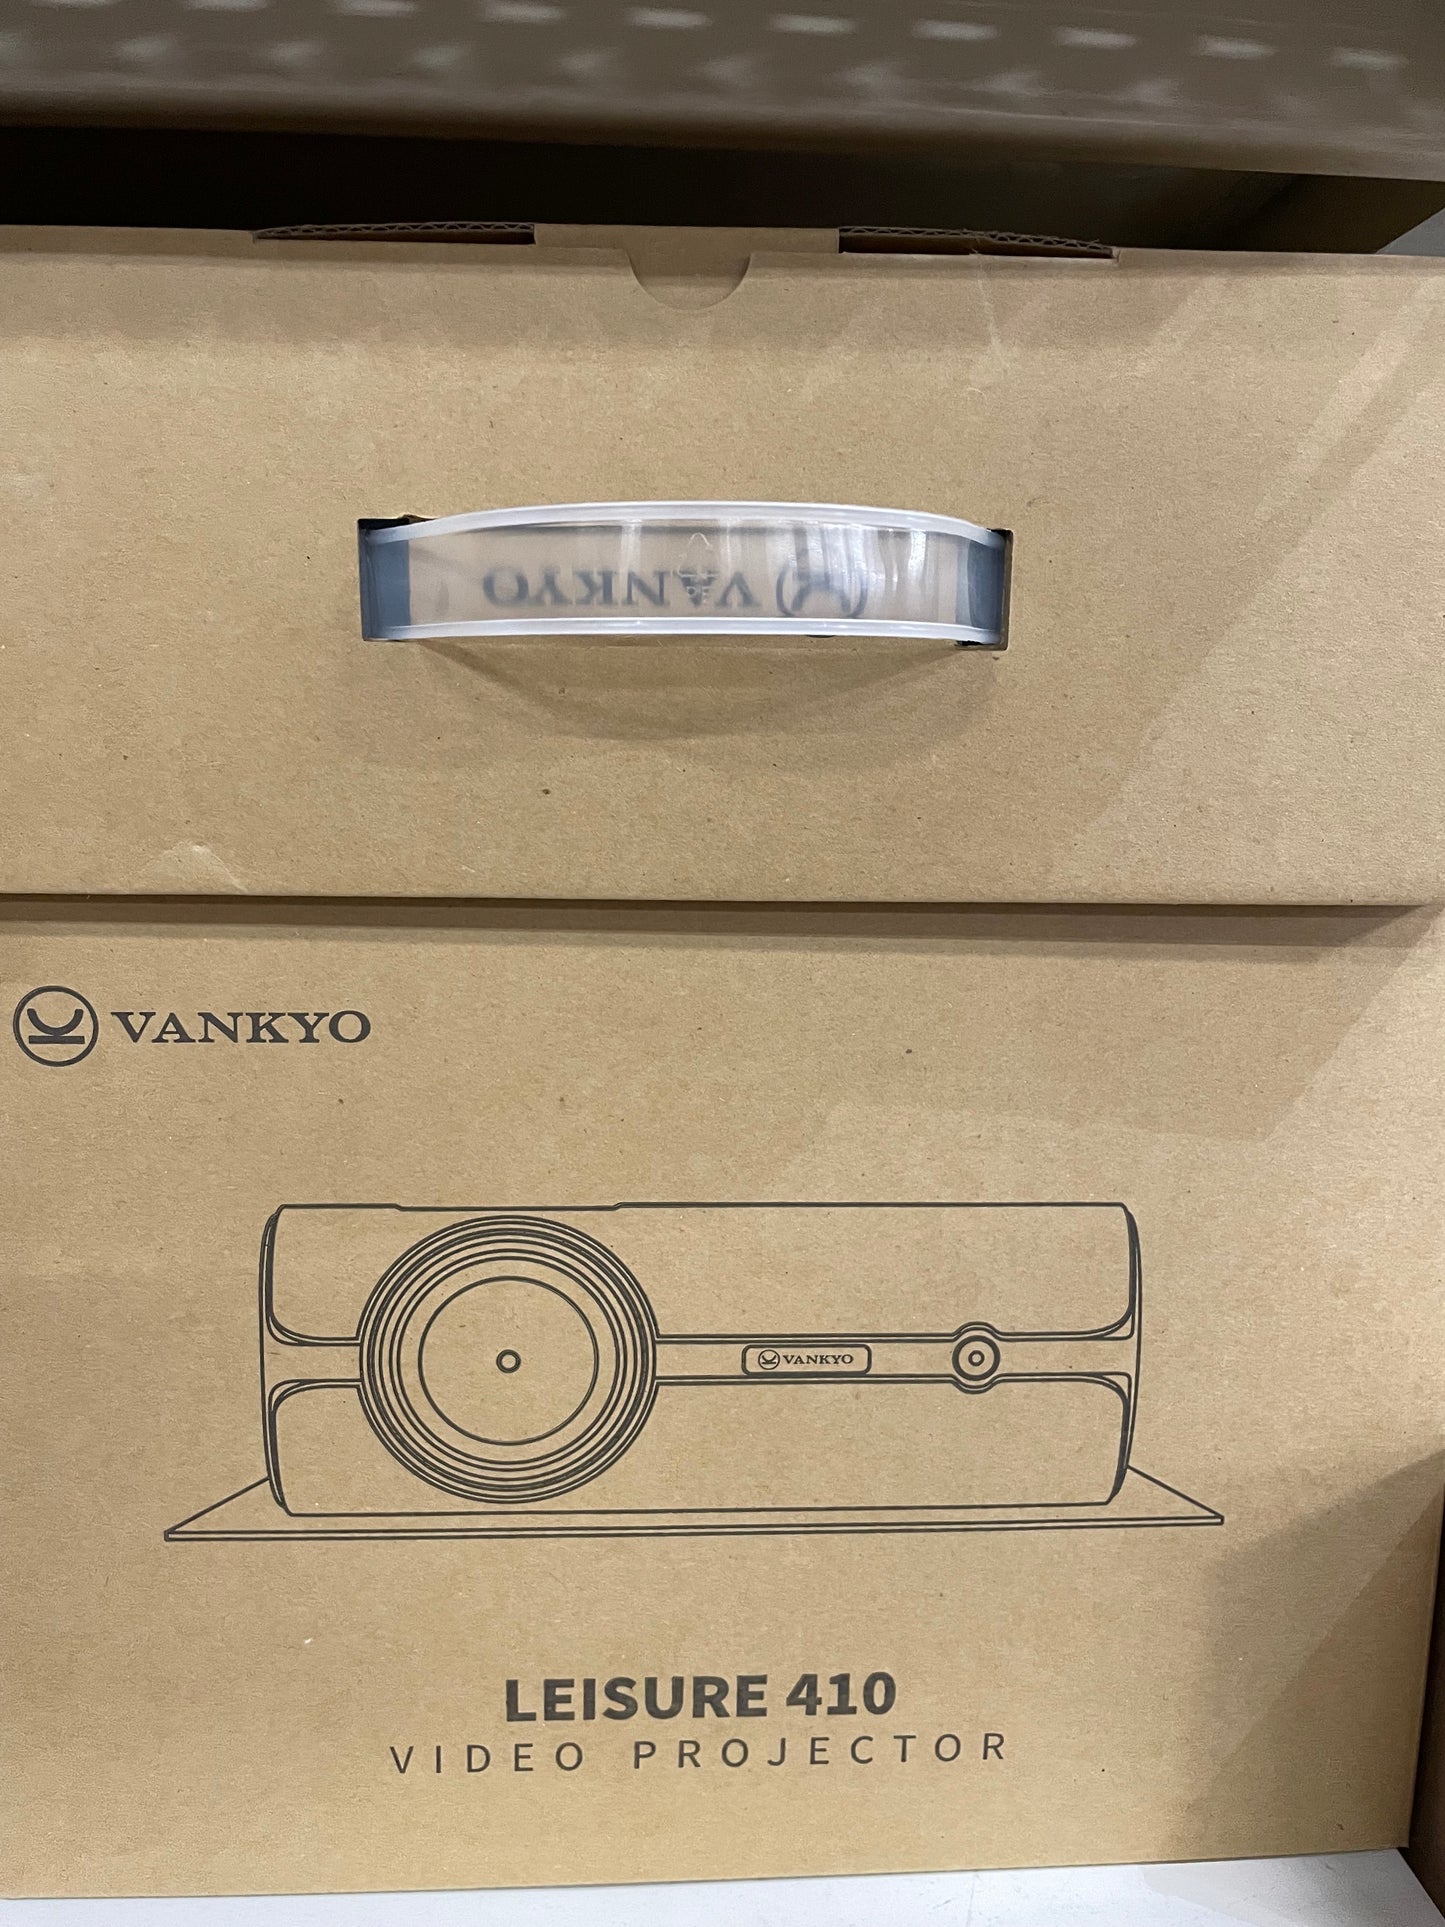 Vankyo Leisure 410 170" Video Projector